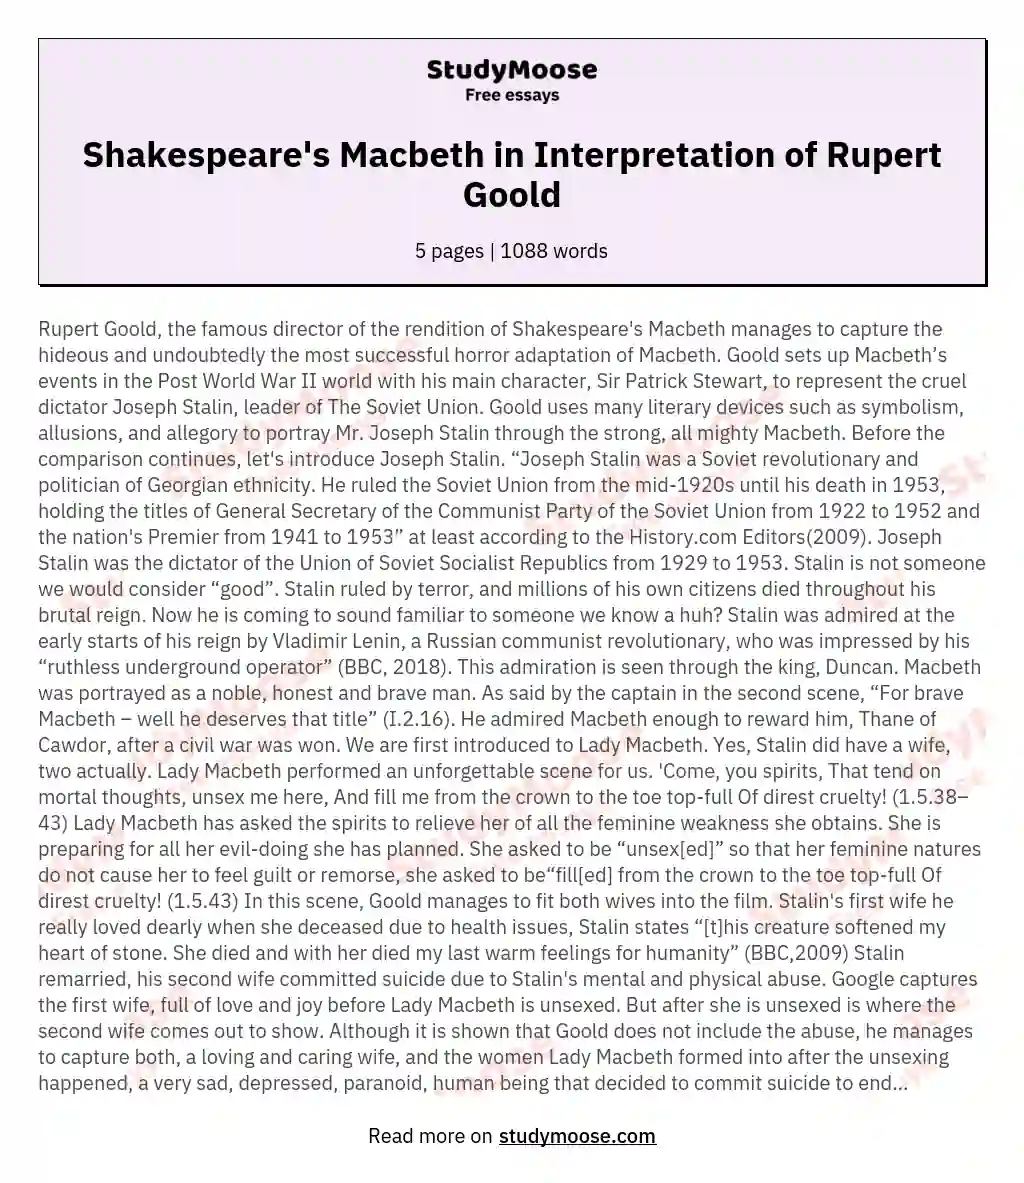 Shakespeare's Macbeth in Interpretation of Rupert Goold